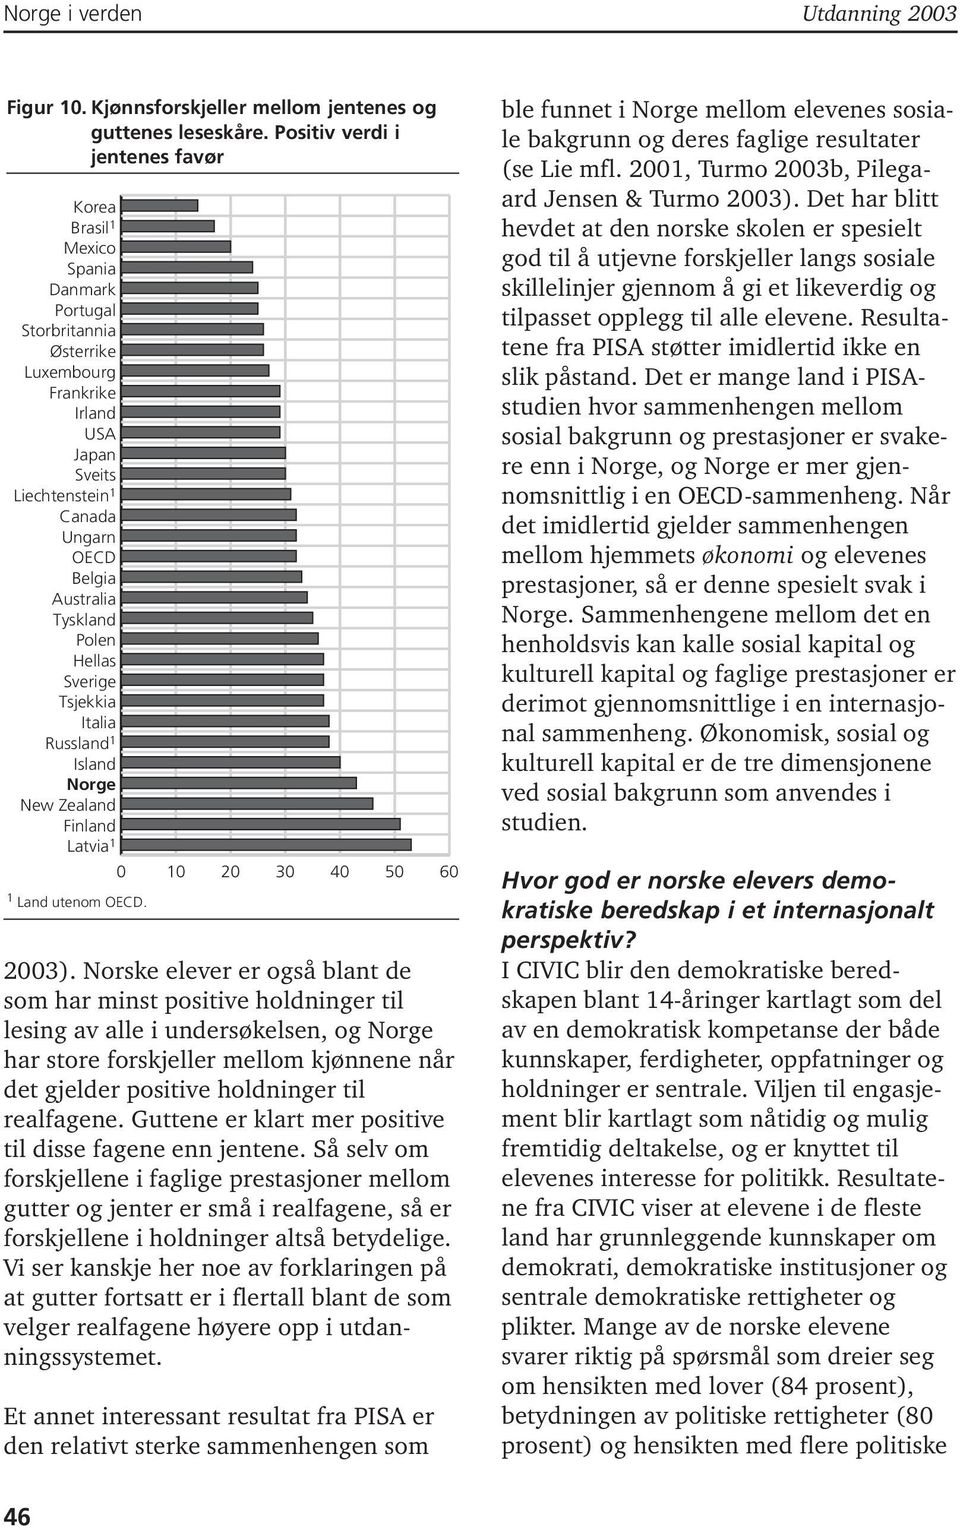 Tyskland Polen Hellas Sverige Tsjekkia Italia Russland 1 Island Norge New Zealand Finland Latvia 1 0 10 20 30 40 50 60 1 Land utenom OECD. 2003).